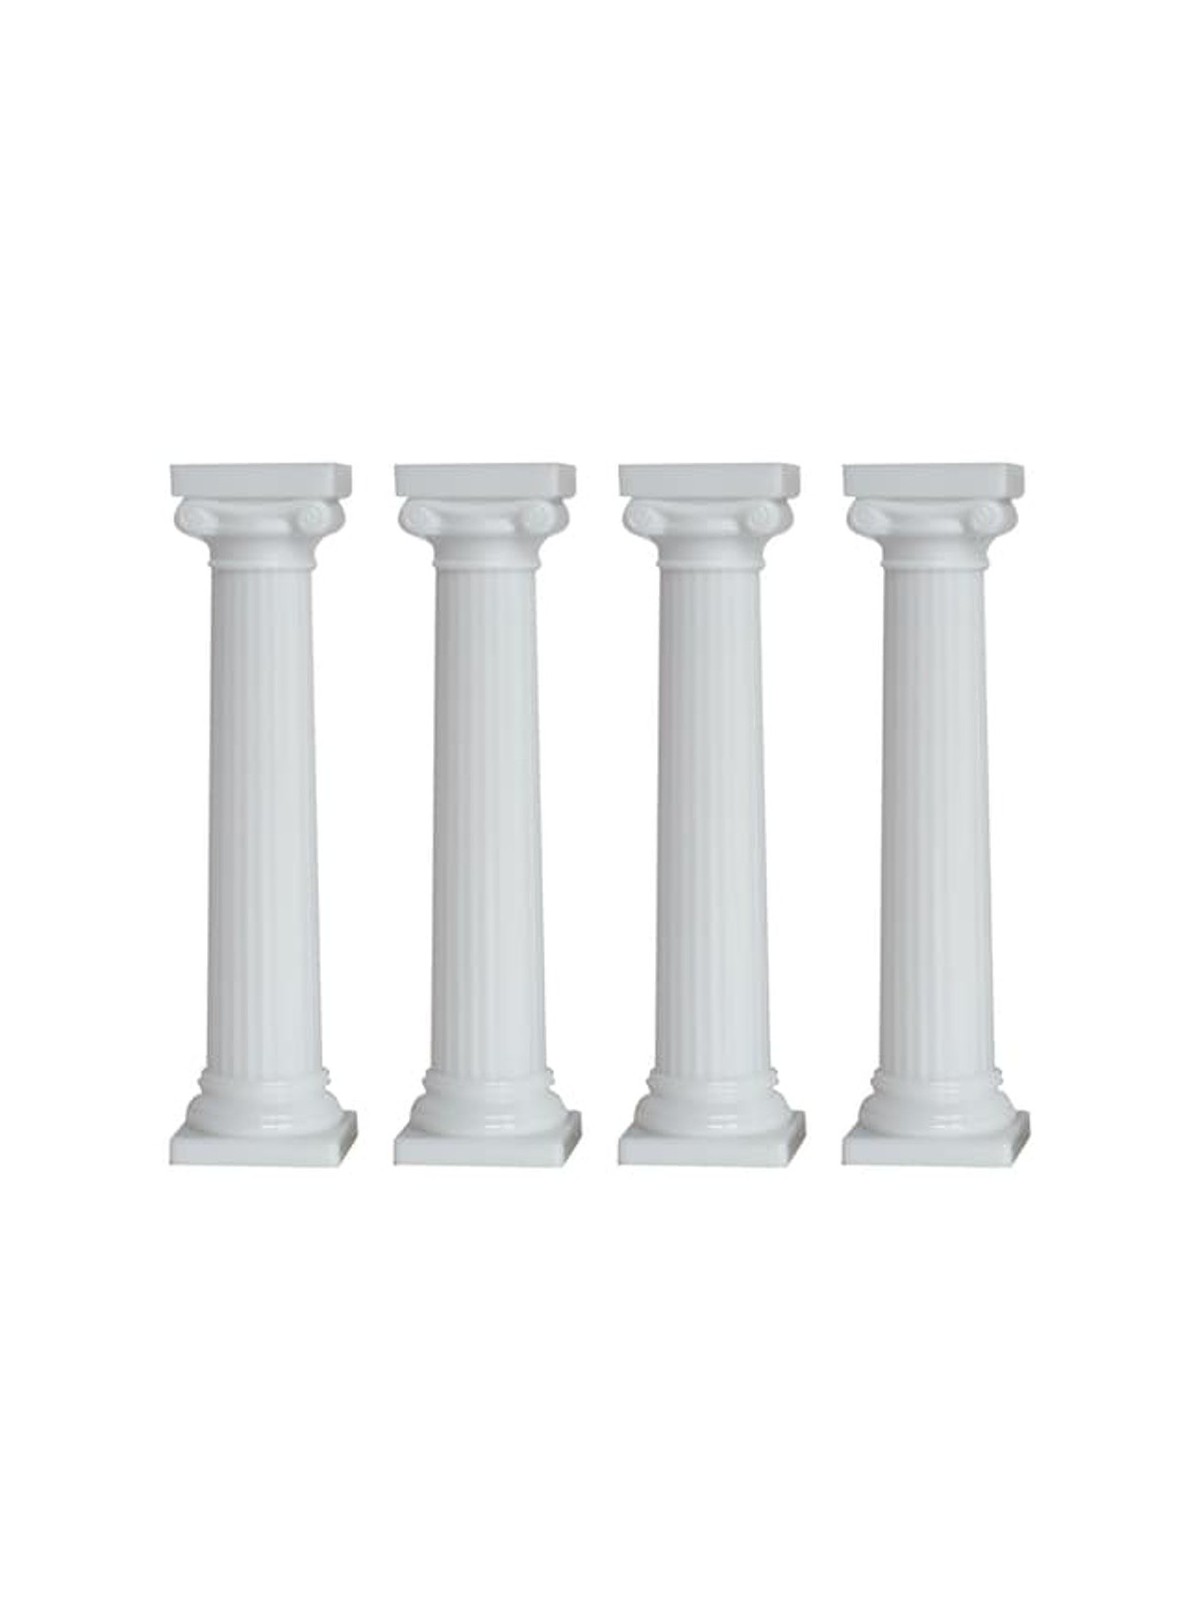 Caketools - Griechische Säulen - 4 Stück 13cm